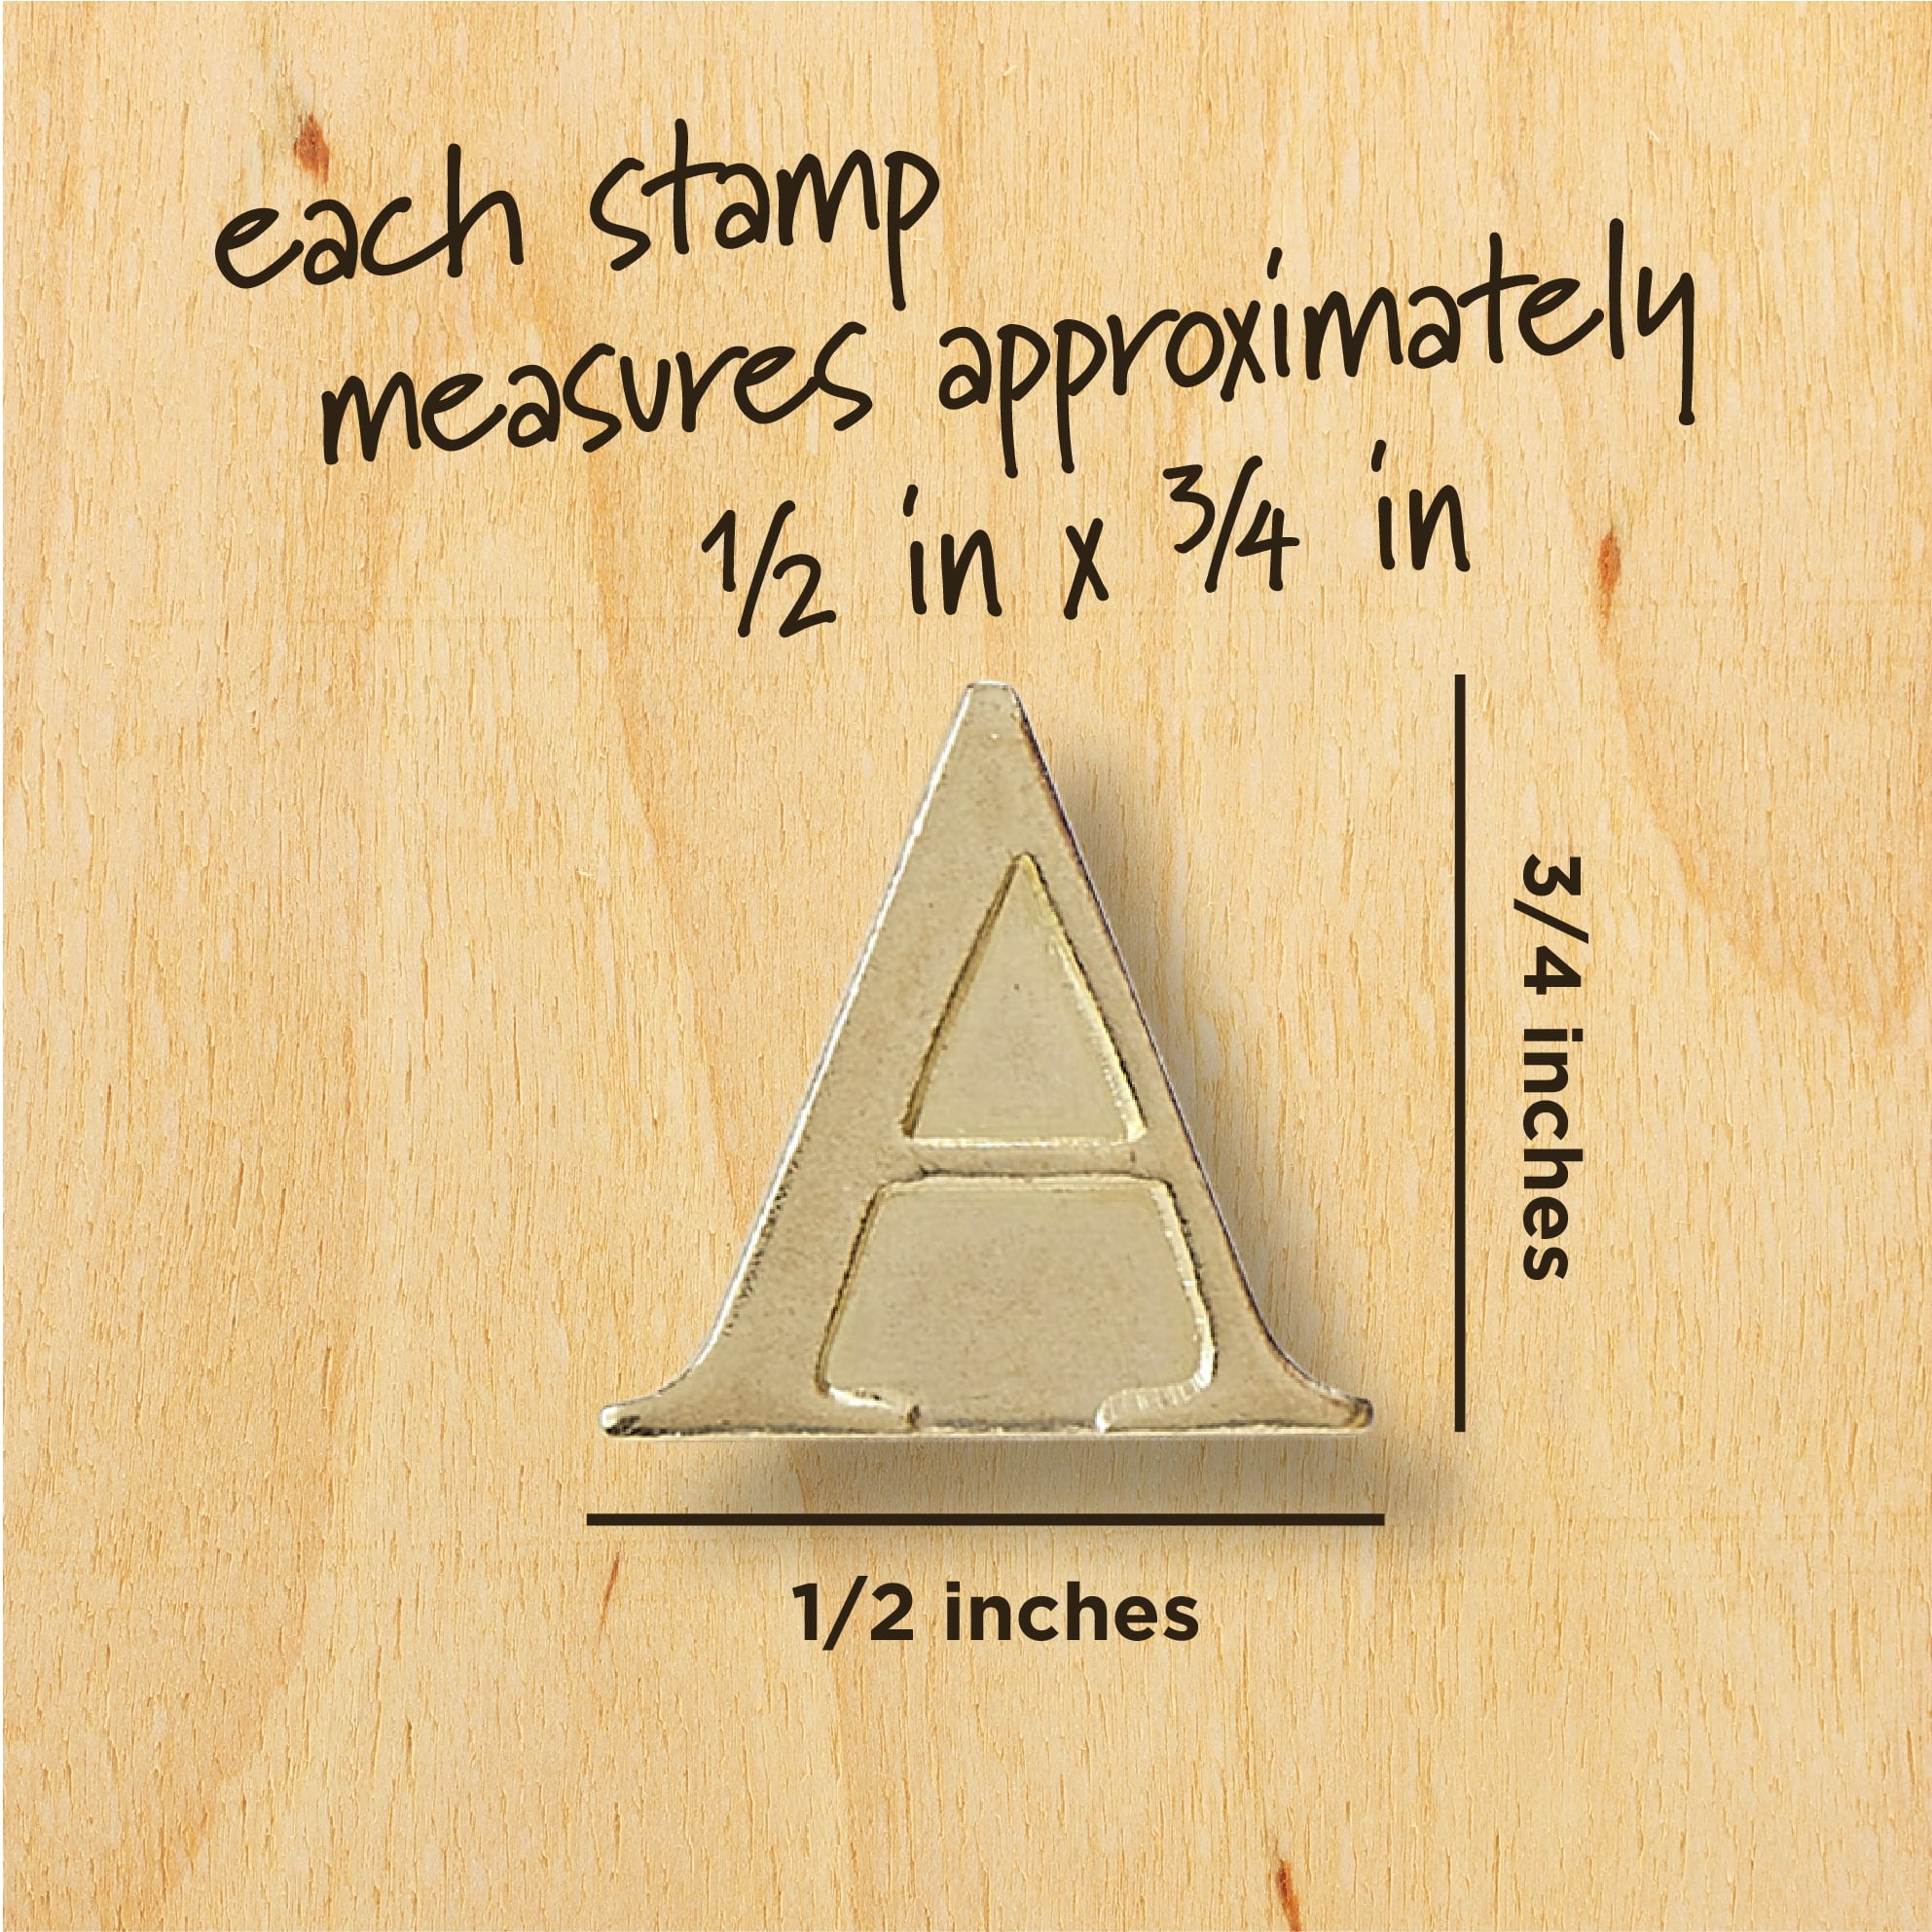 Plaid Wood Burning Alphabet Metal Stamp Set, 26 Pieces